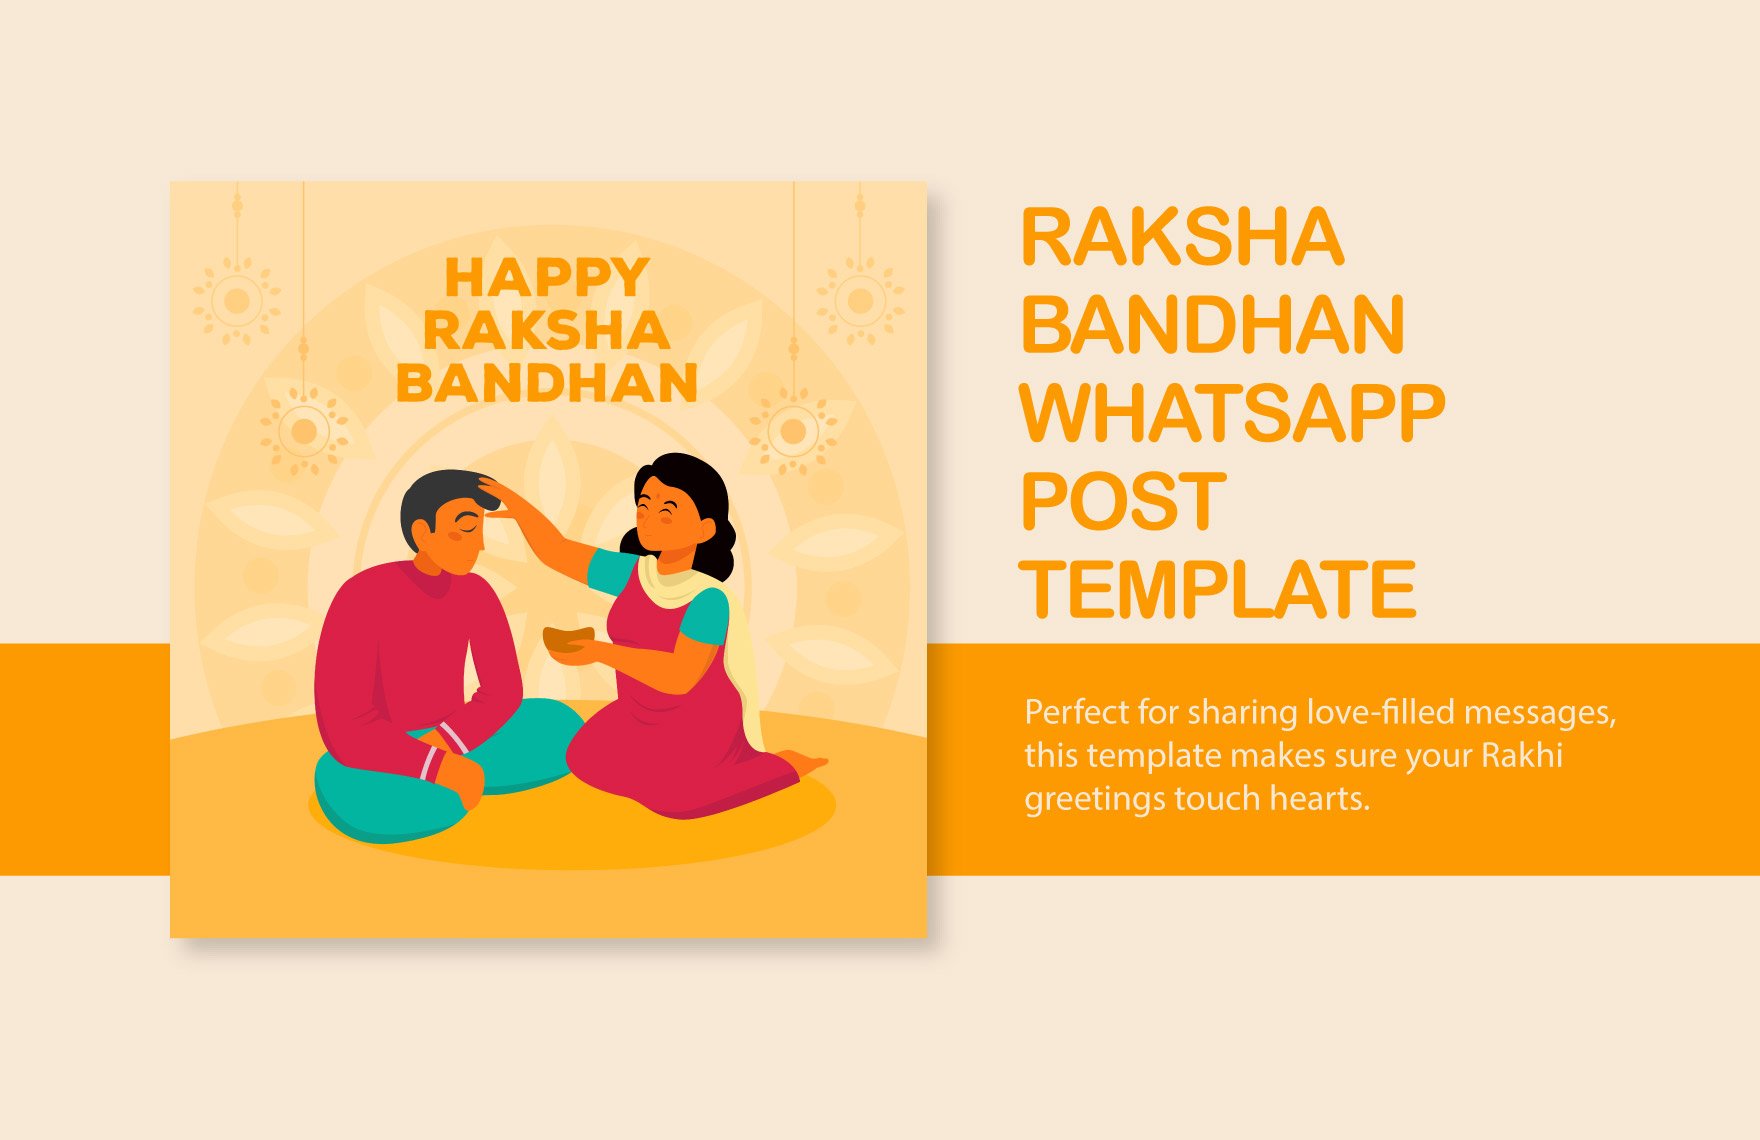 Raksha Bandhan WhatsApp Post Template